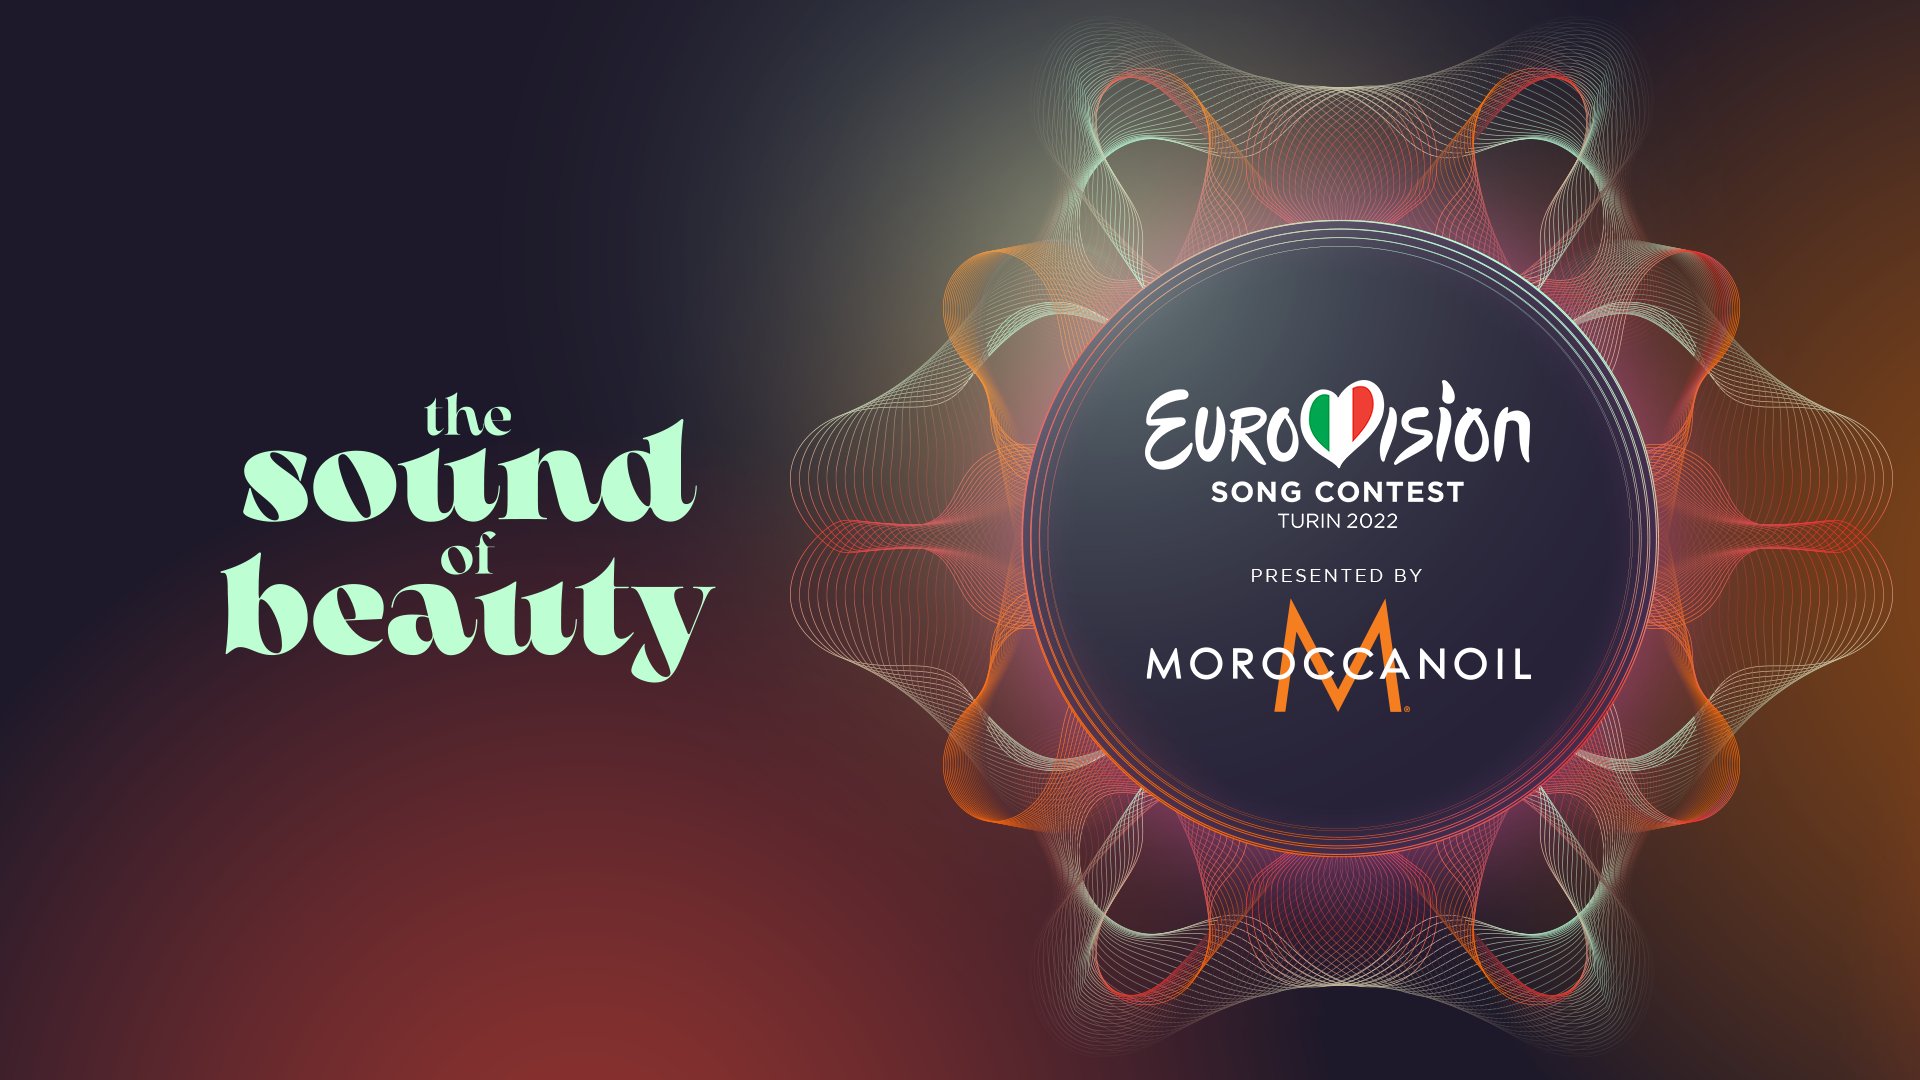 Eurovision Song Contest e signori, introducing the bellissimo slogan and theme art of #Eurovision 2022